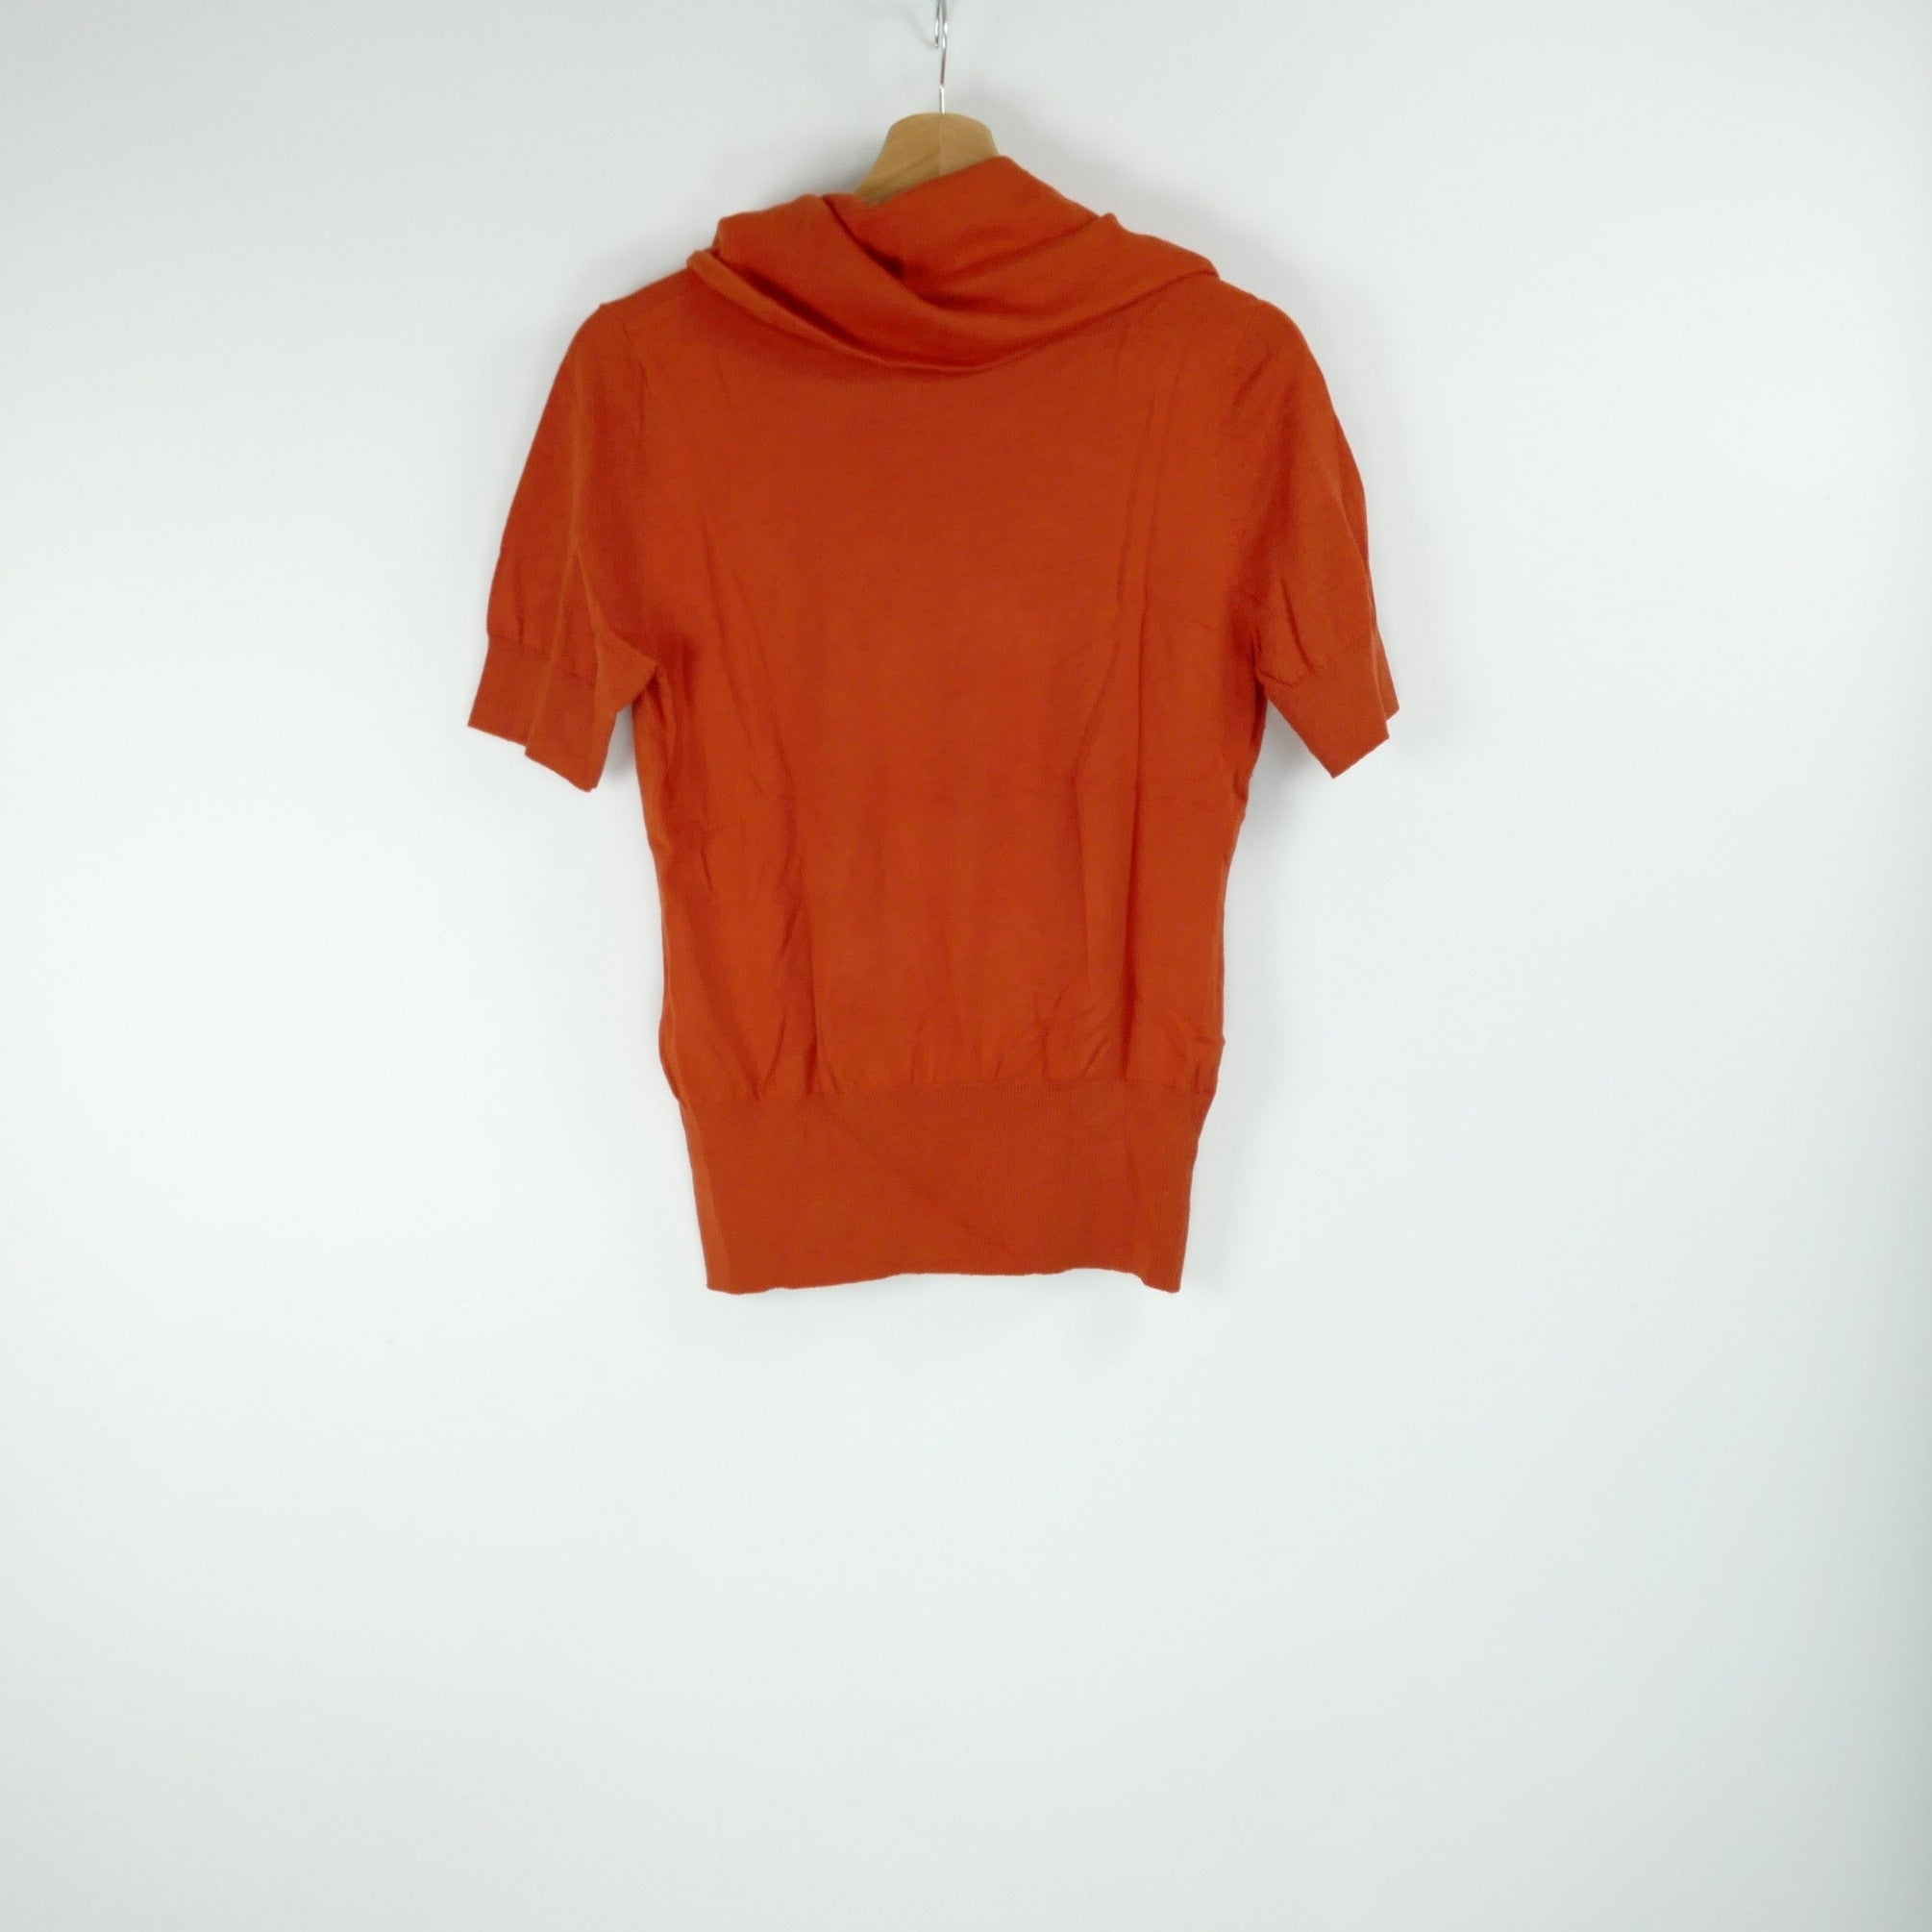 Oranger Damen Pullover kurzarm, Gr. 42, H&M